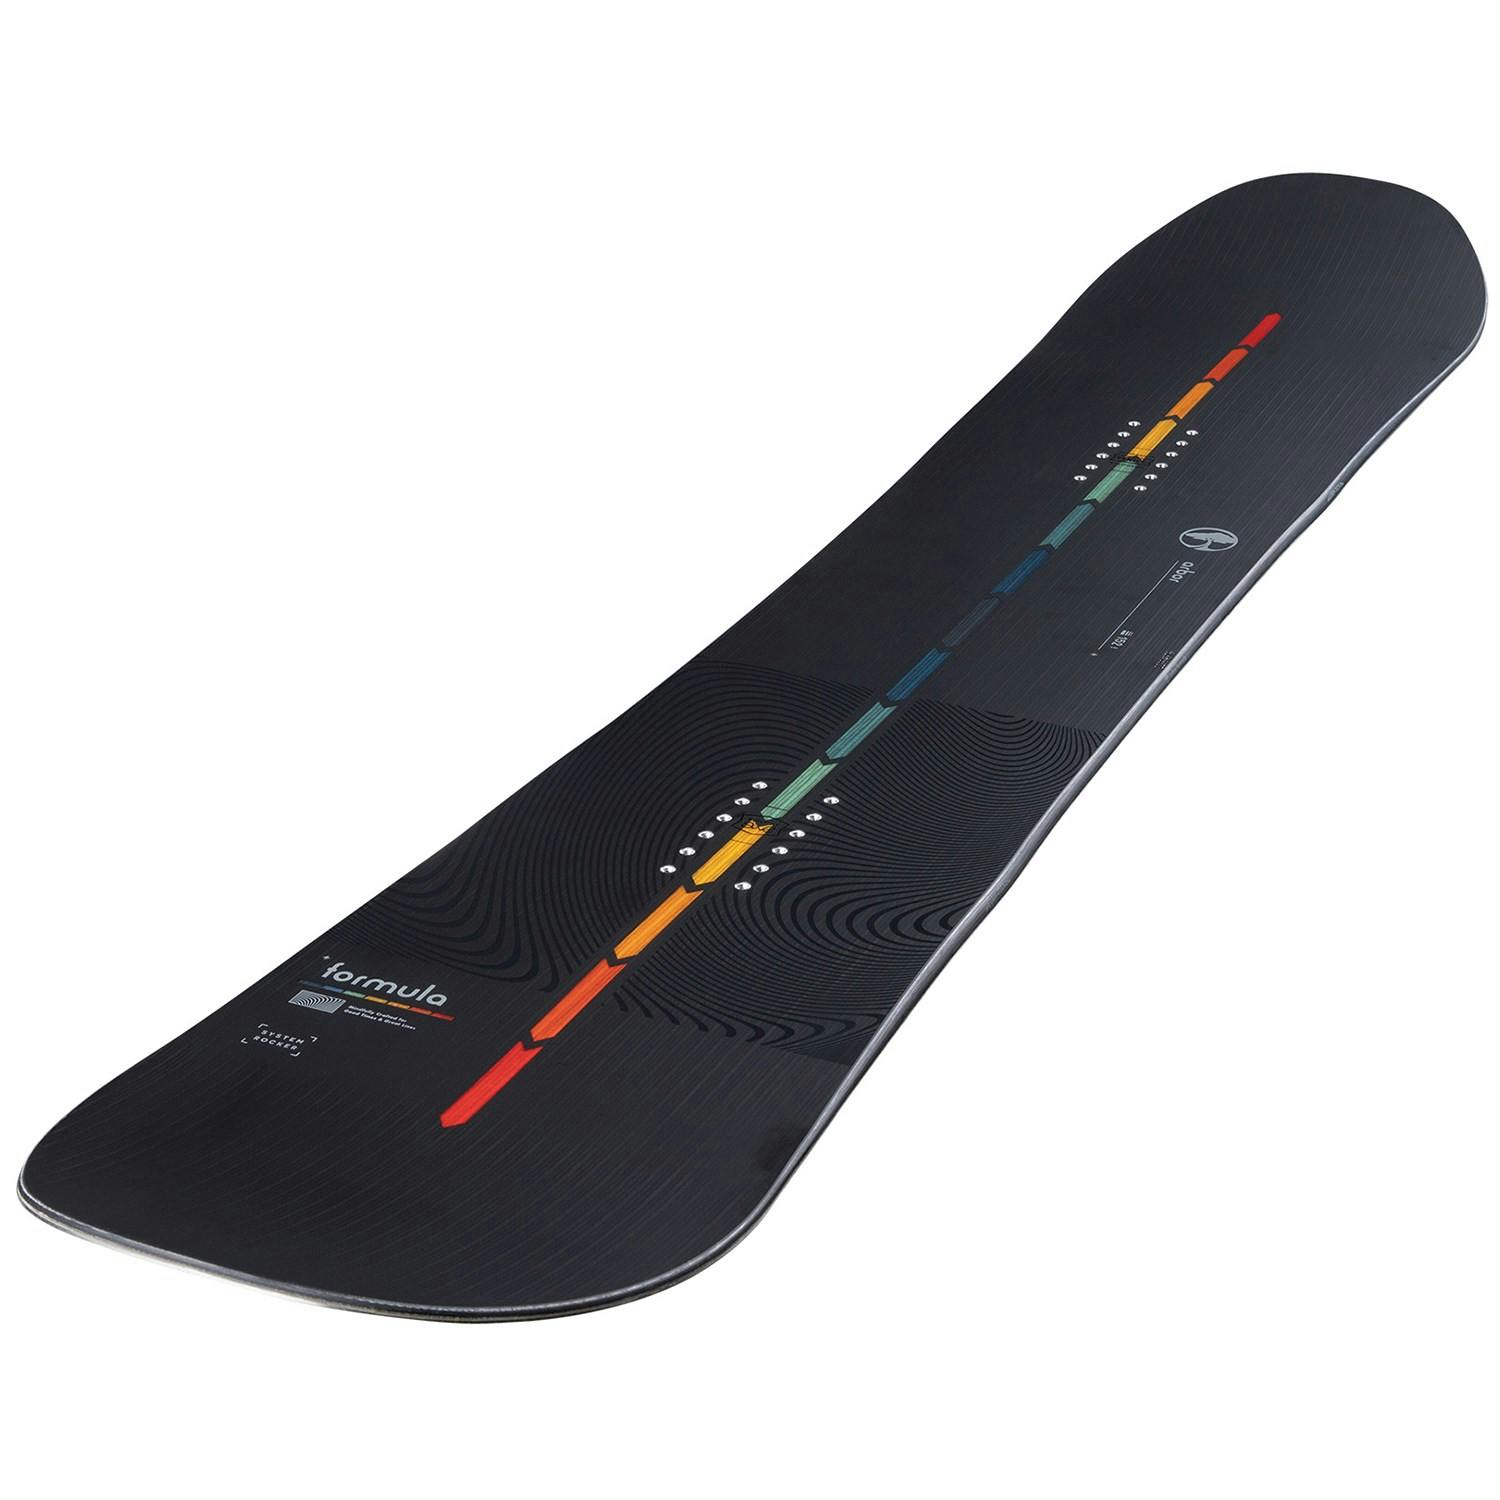 Arbor Formula Rocker Snowboard · 2022 · 152 cm